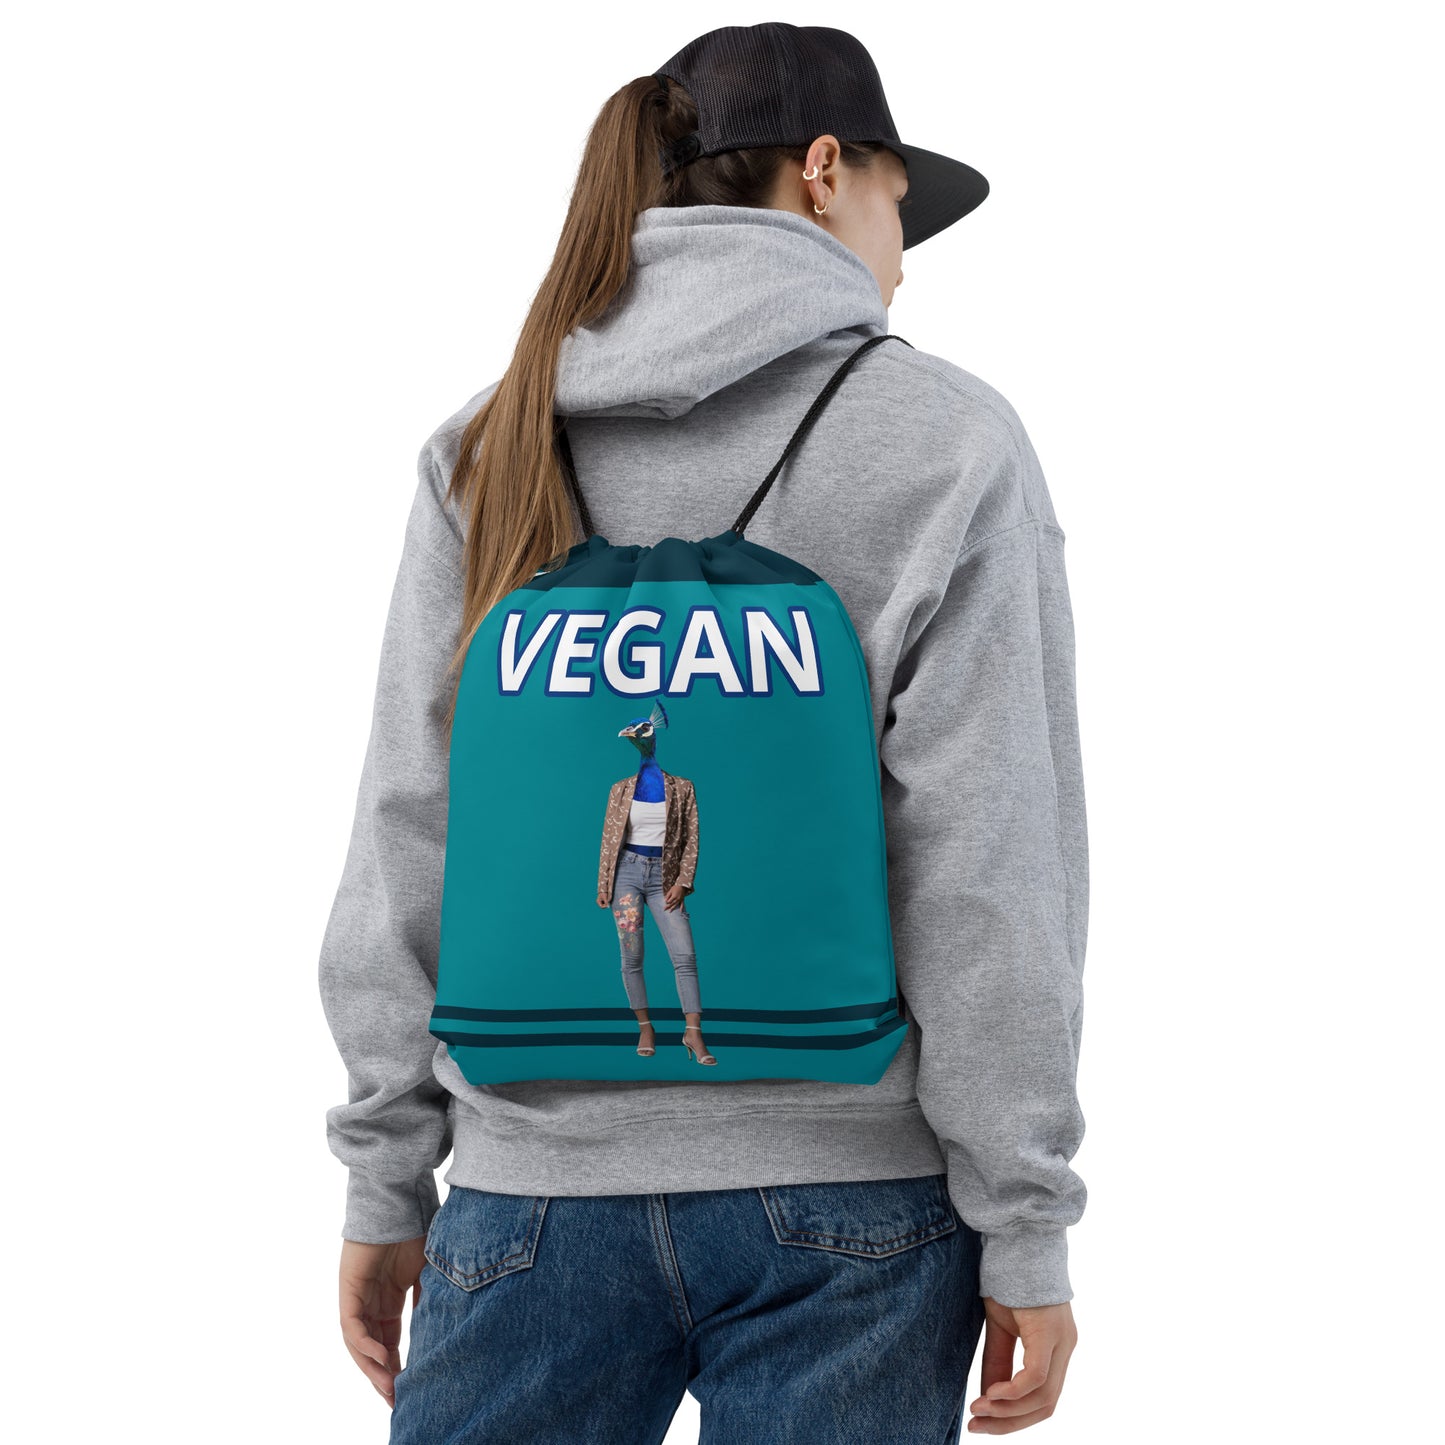 Vegan Chic Drawstring bag